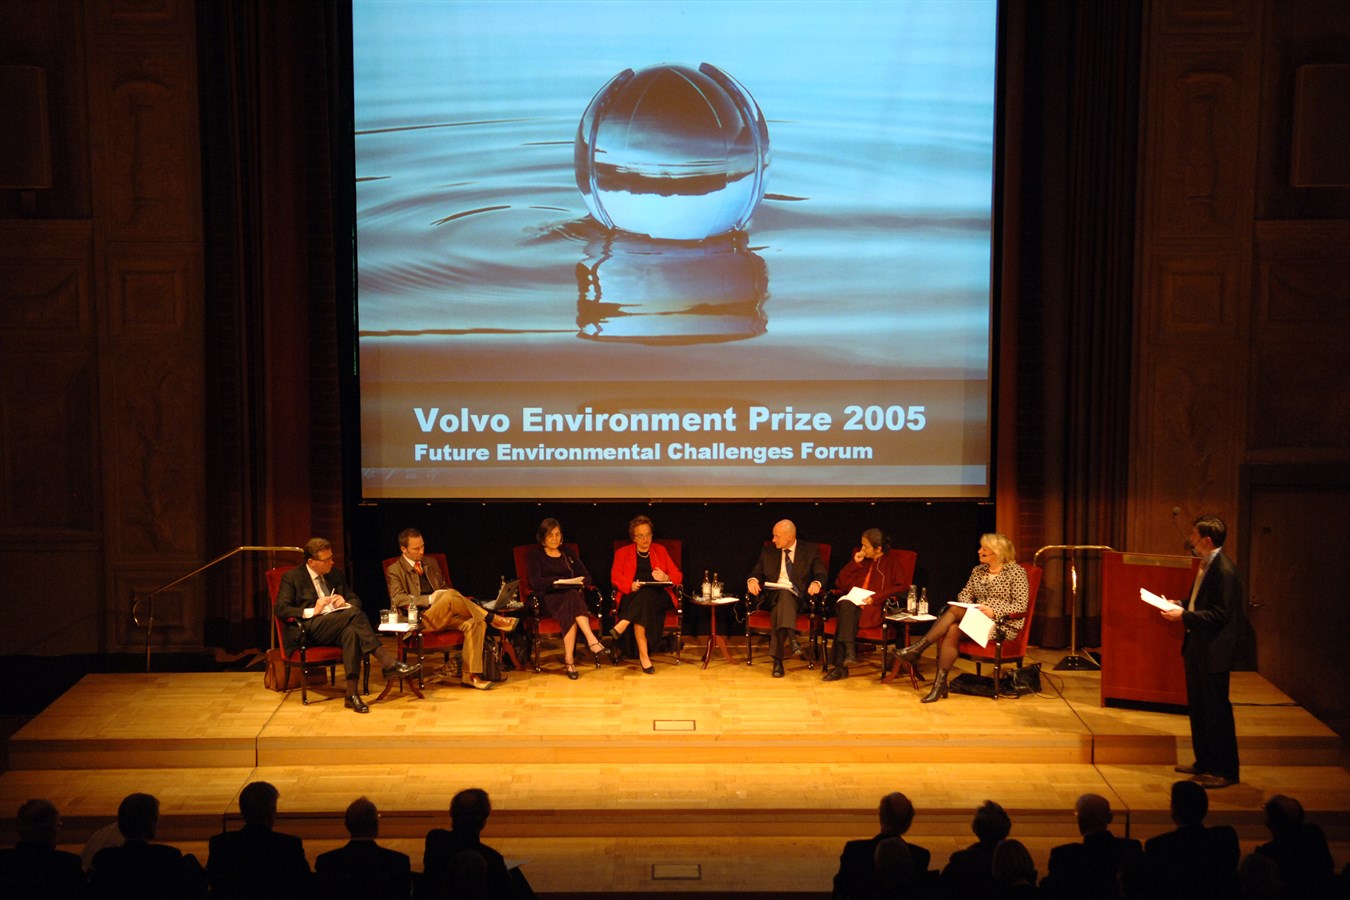 Volvo Environment Prize 2005. Forum - future environmental challenges. Participants: Leif Johansson, Dennis Pamlin, Prof Aila Inkeri Keto, Dr Mary T Kalin Arroyo, David Simpson, Dr Gita Sen, and Catharina Elmsäter-Svärd.